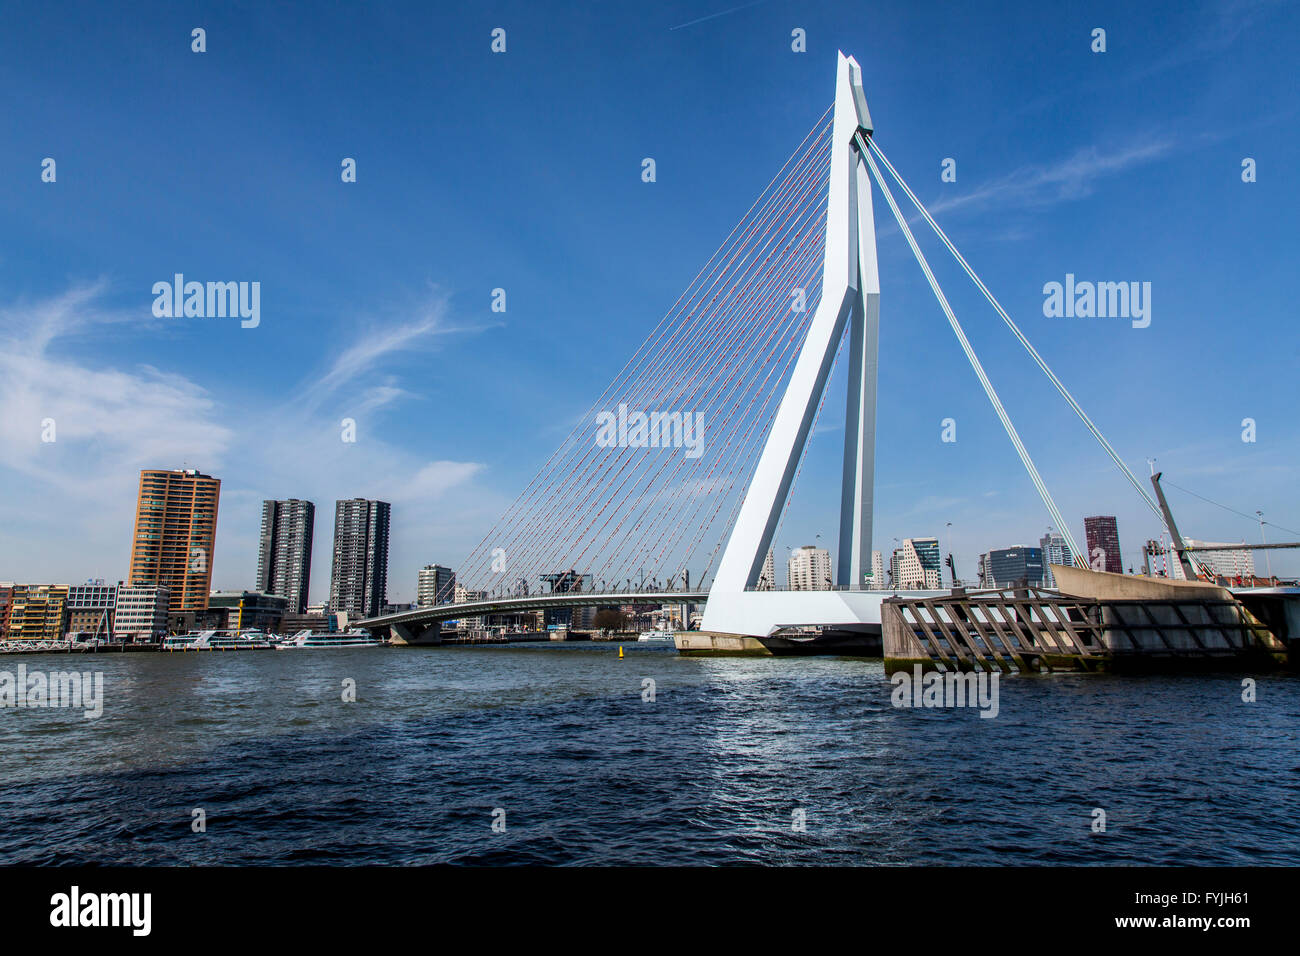 Erasmus bridge over river Nieuwe Maas, skyline of downtown Rotterdam, The Netherlands, traffic on bridge, ships on river, Stock Photo